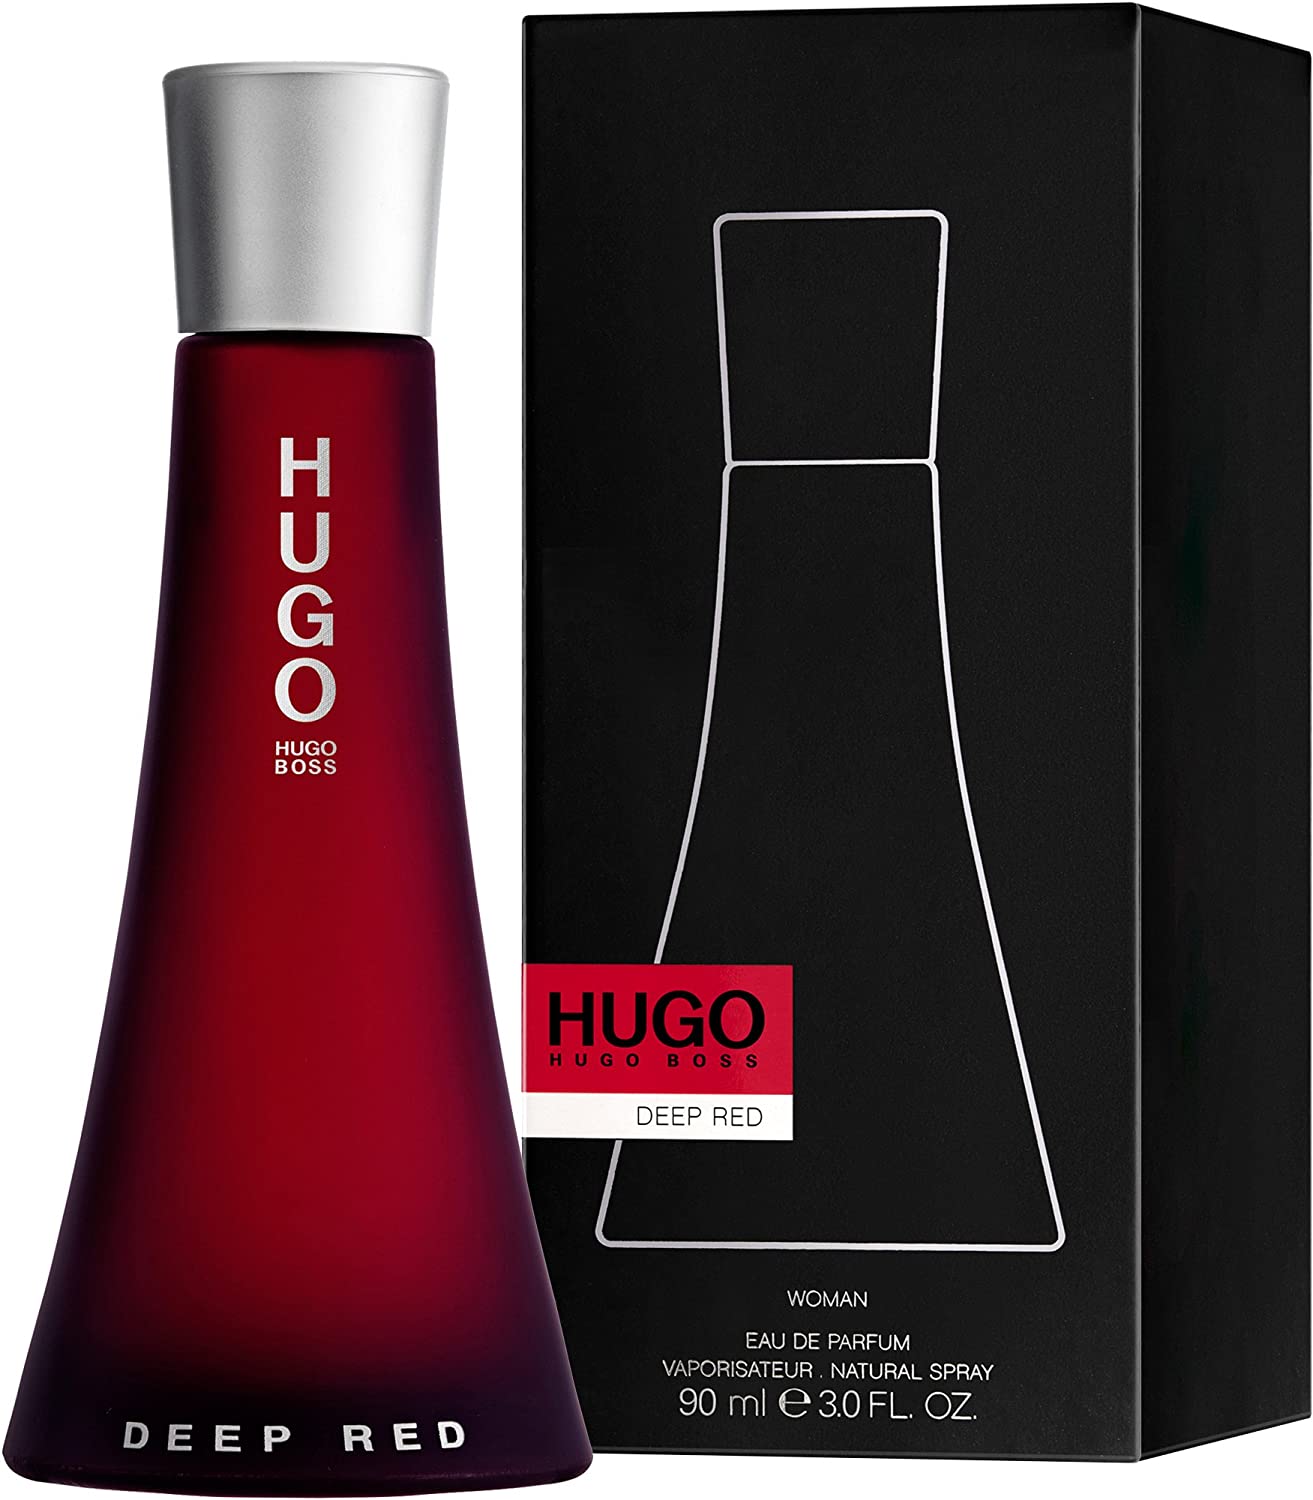 Perfume para Mujer HUGO BOSS DEEP RED 90ml EDP